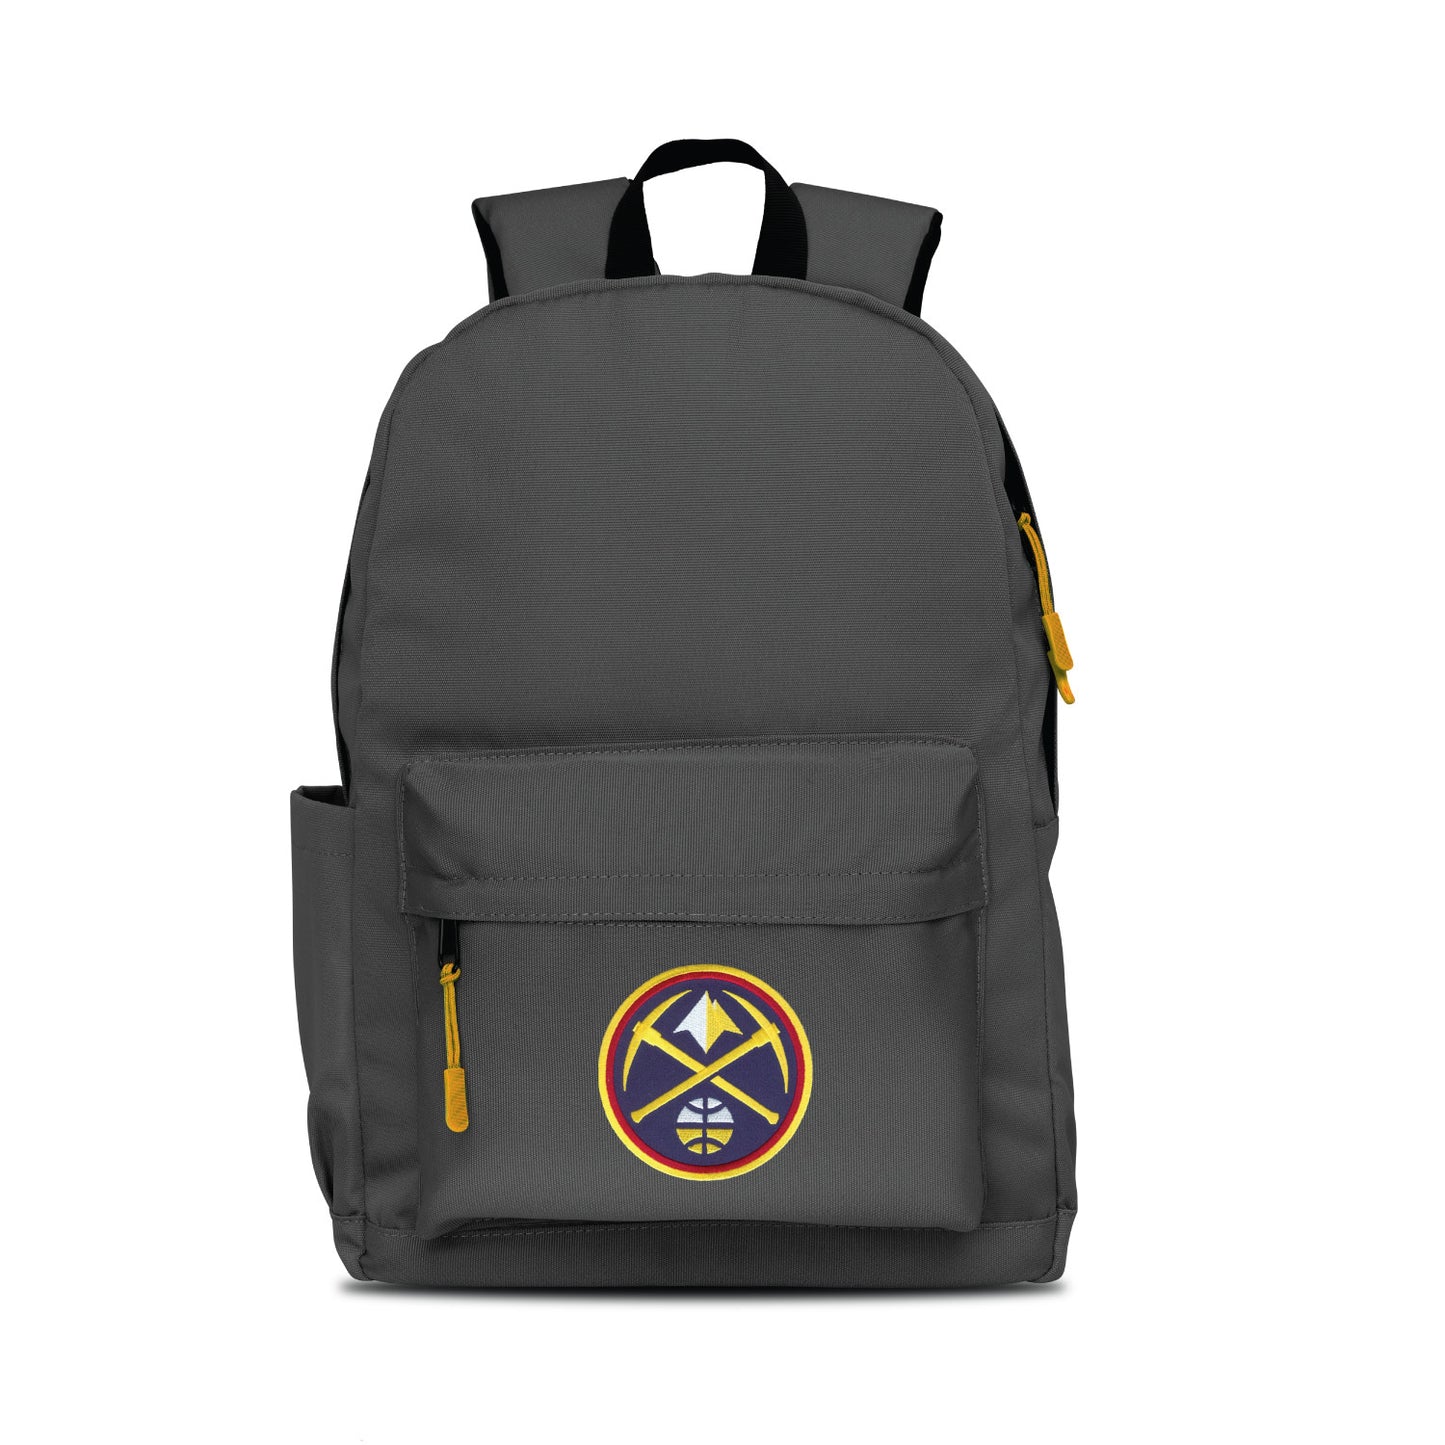 Denver Nuggets Campus Laptop Backpack - Gray